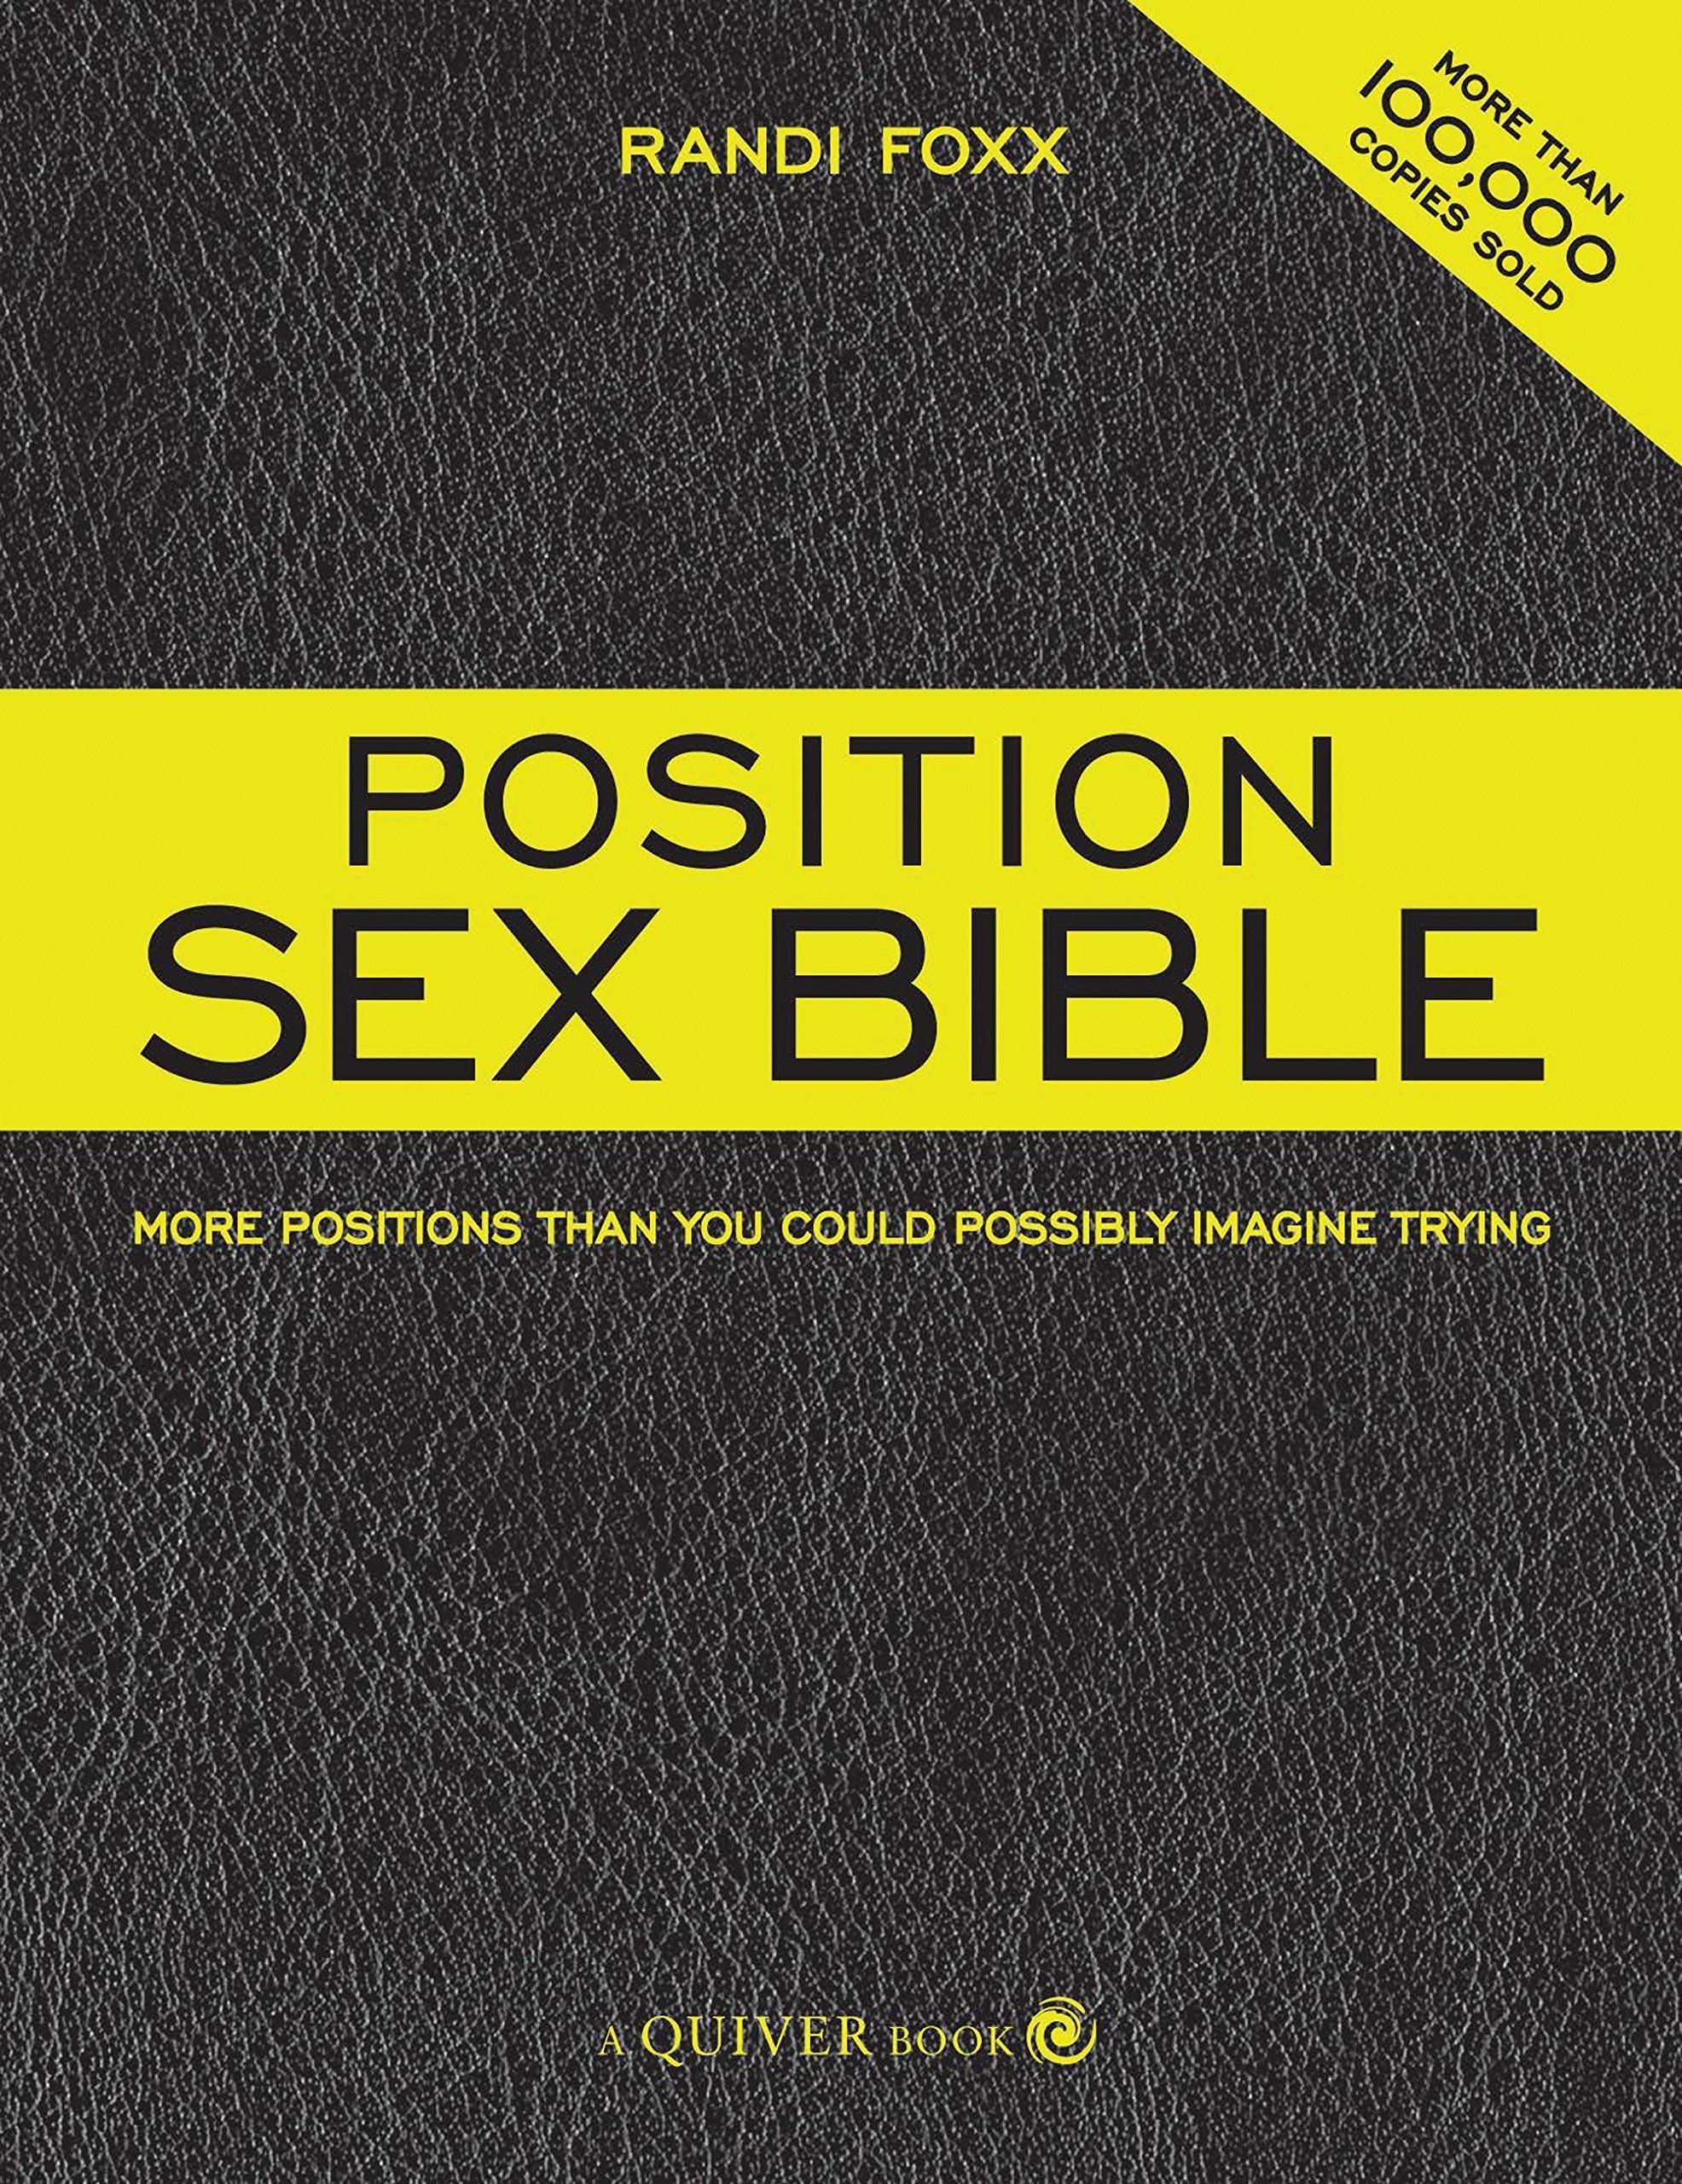 The position sex bible reviews